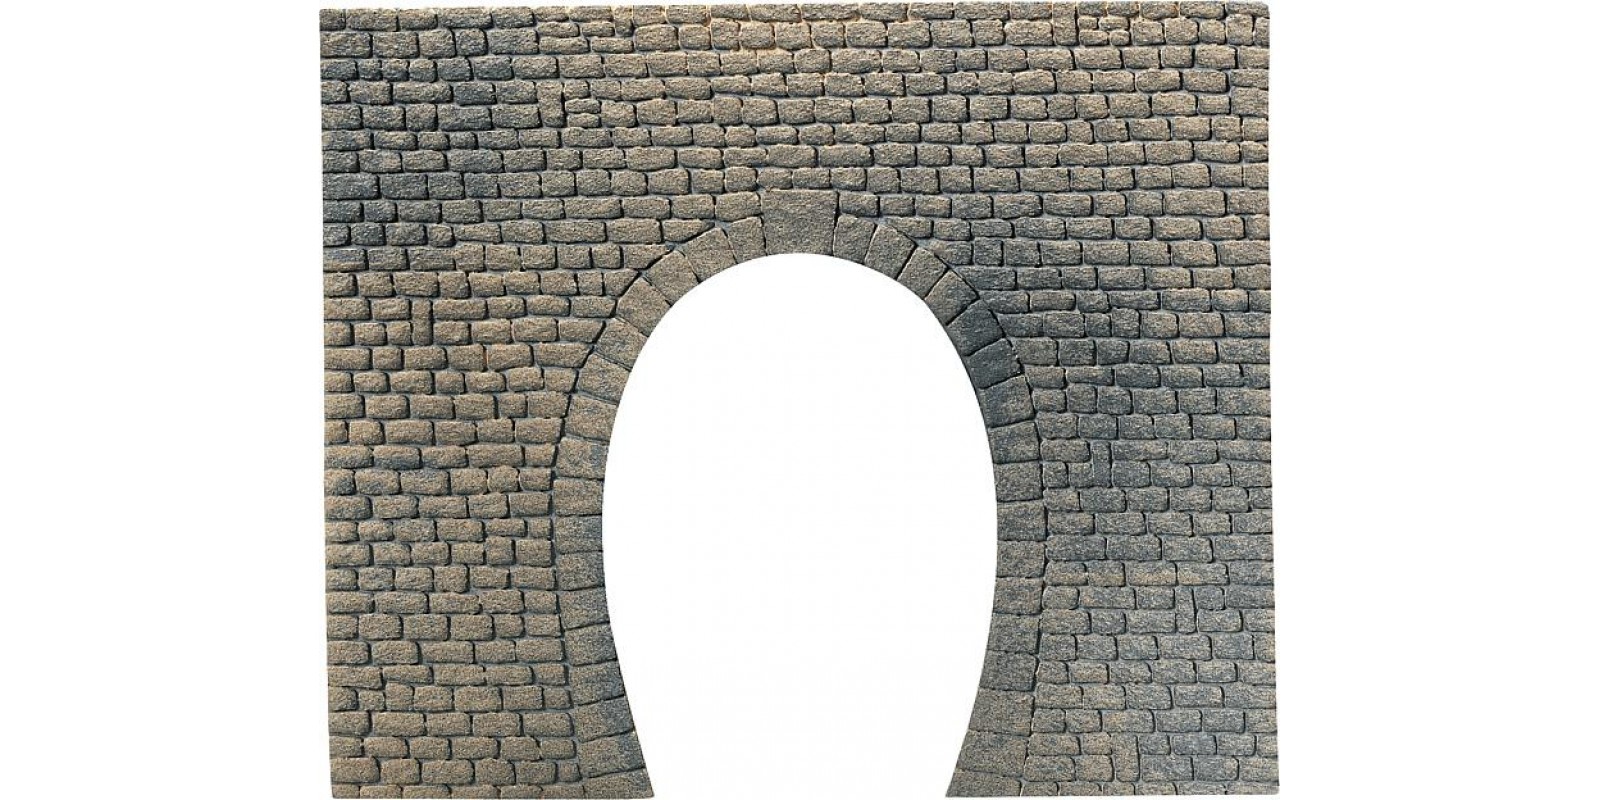 FA170830 Decorative sheet tunnel portal, Natural cut stone